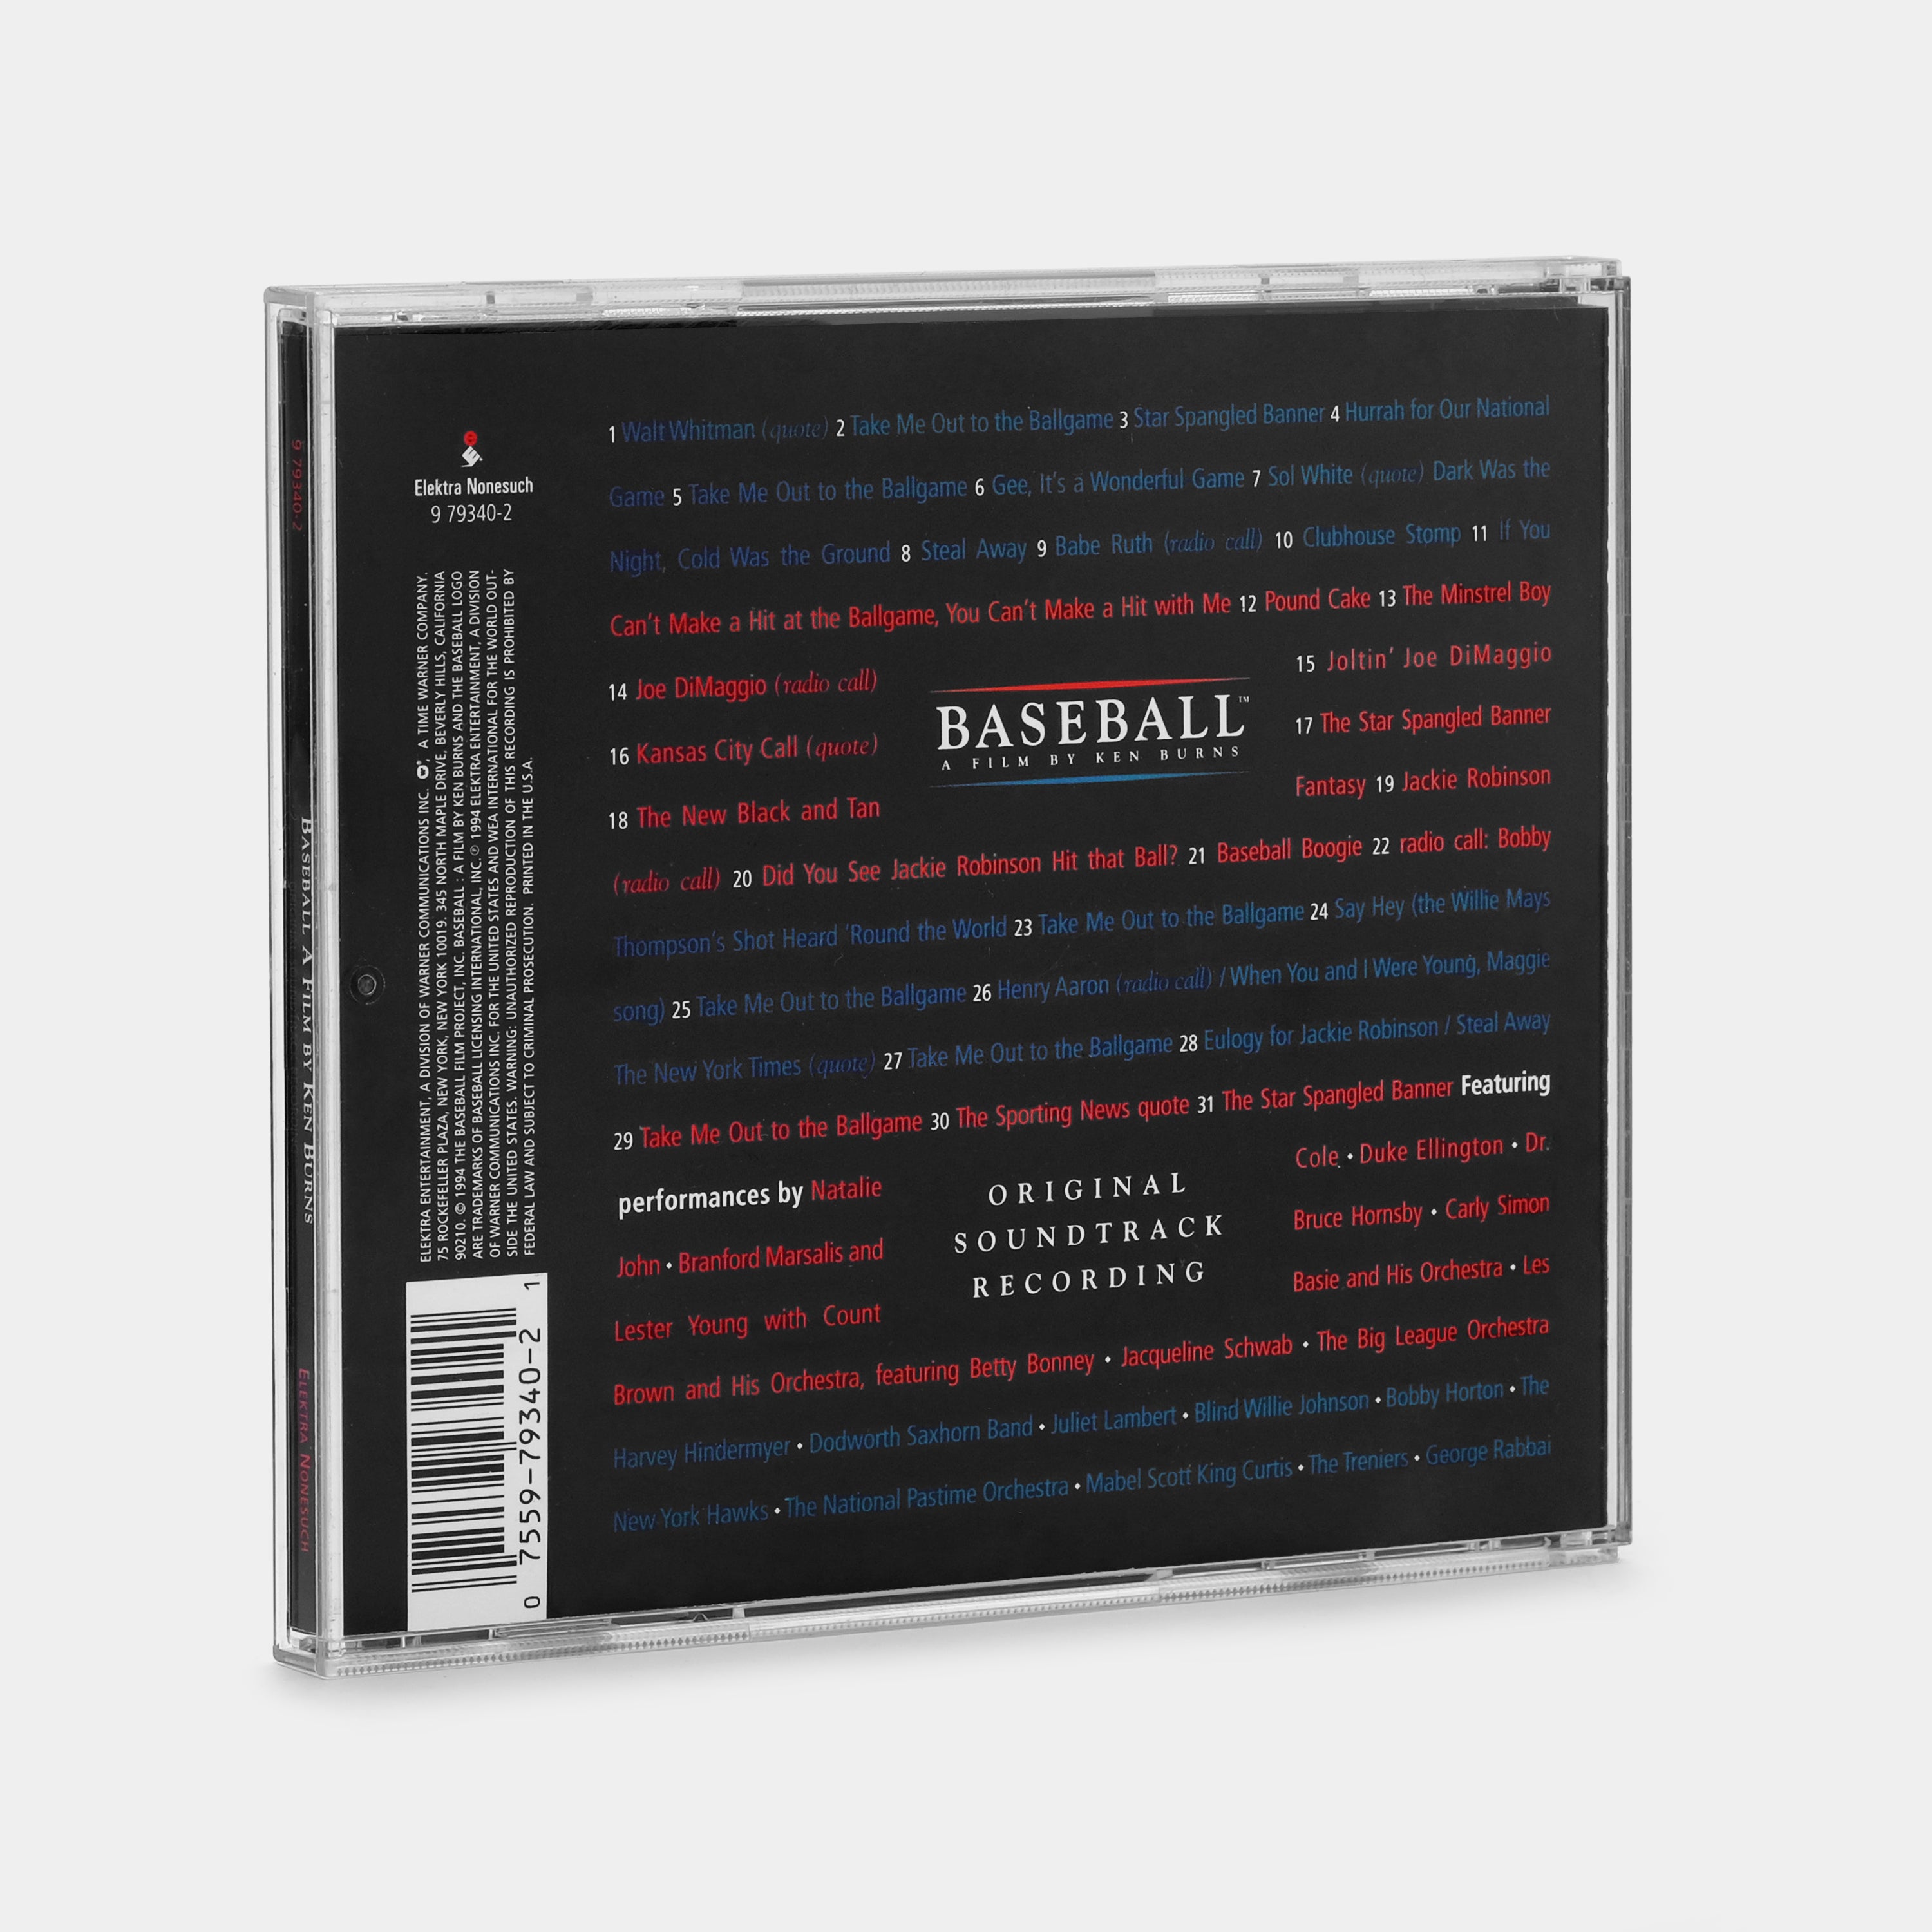 Baseball A Film By Ken Burns (Original Soundtrack Recording) CD